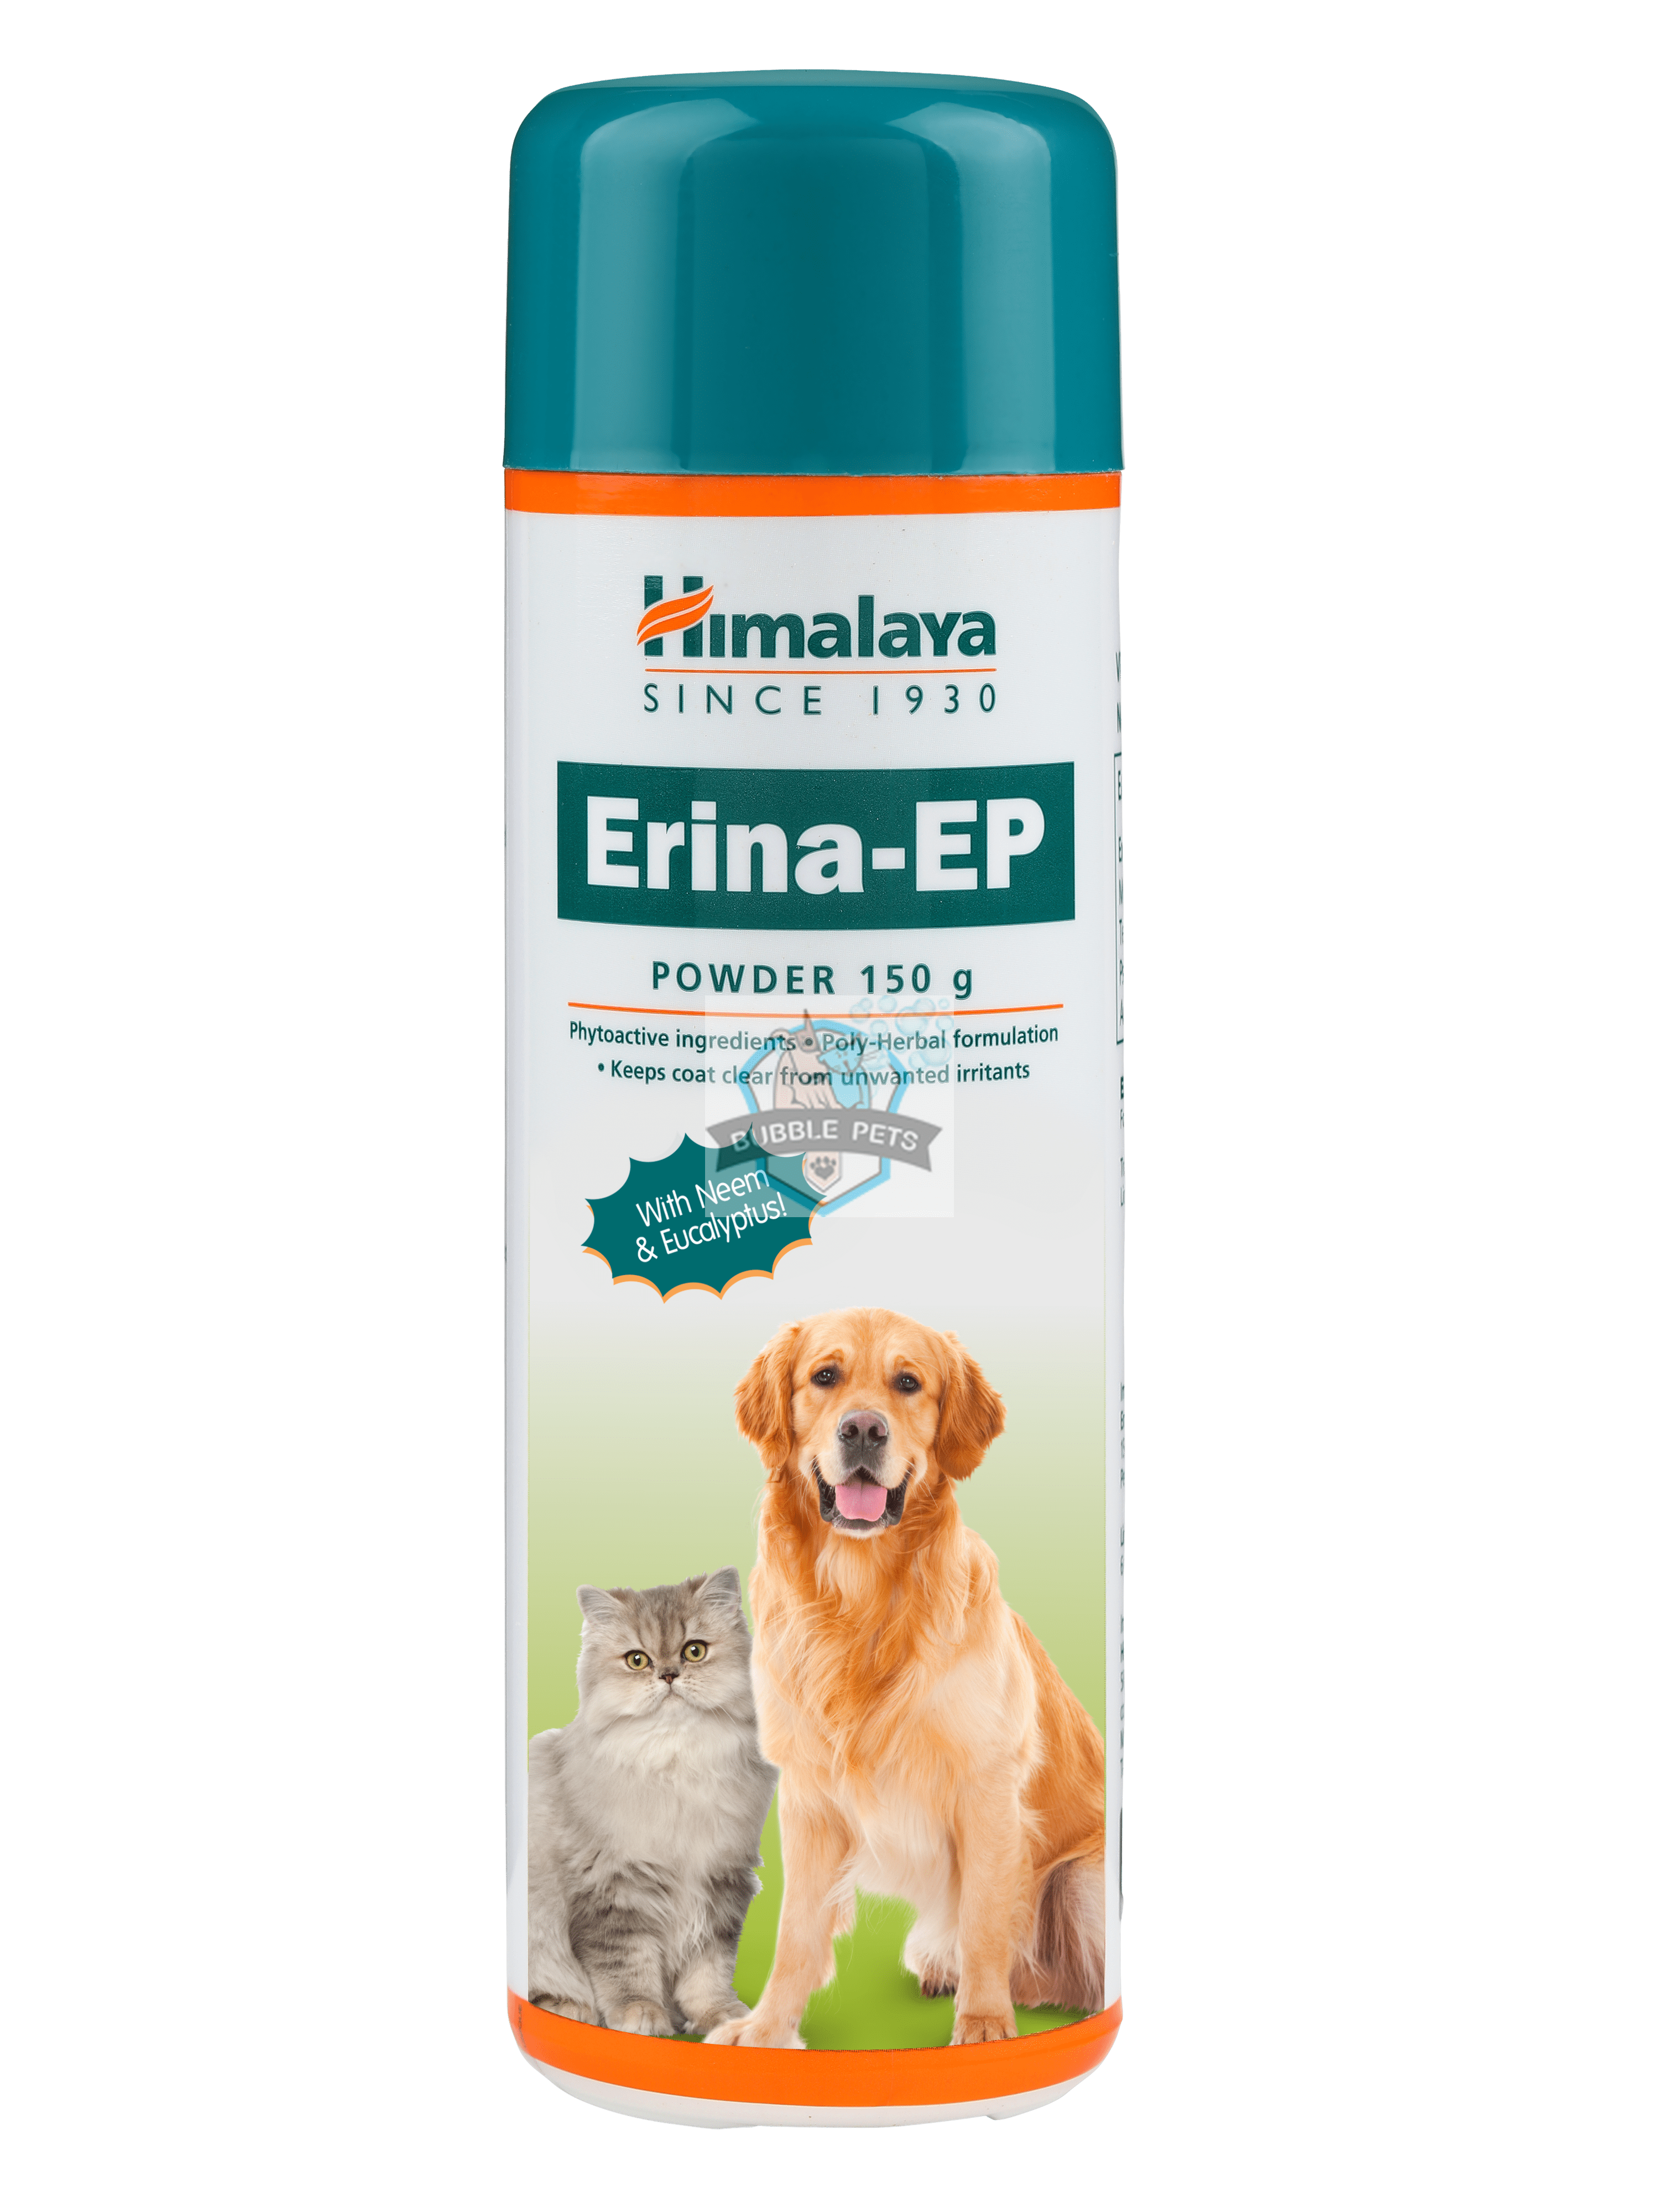 Himalaya Erina EP Dusting Powder (Flea & Tick Control) 150g